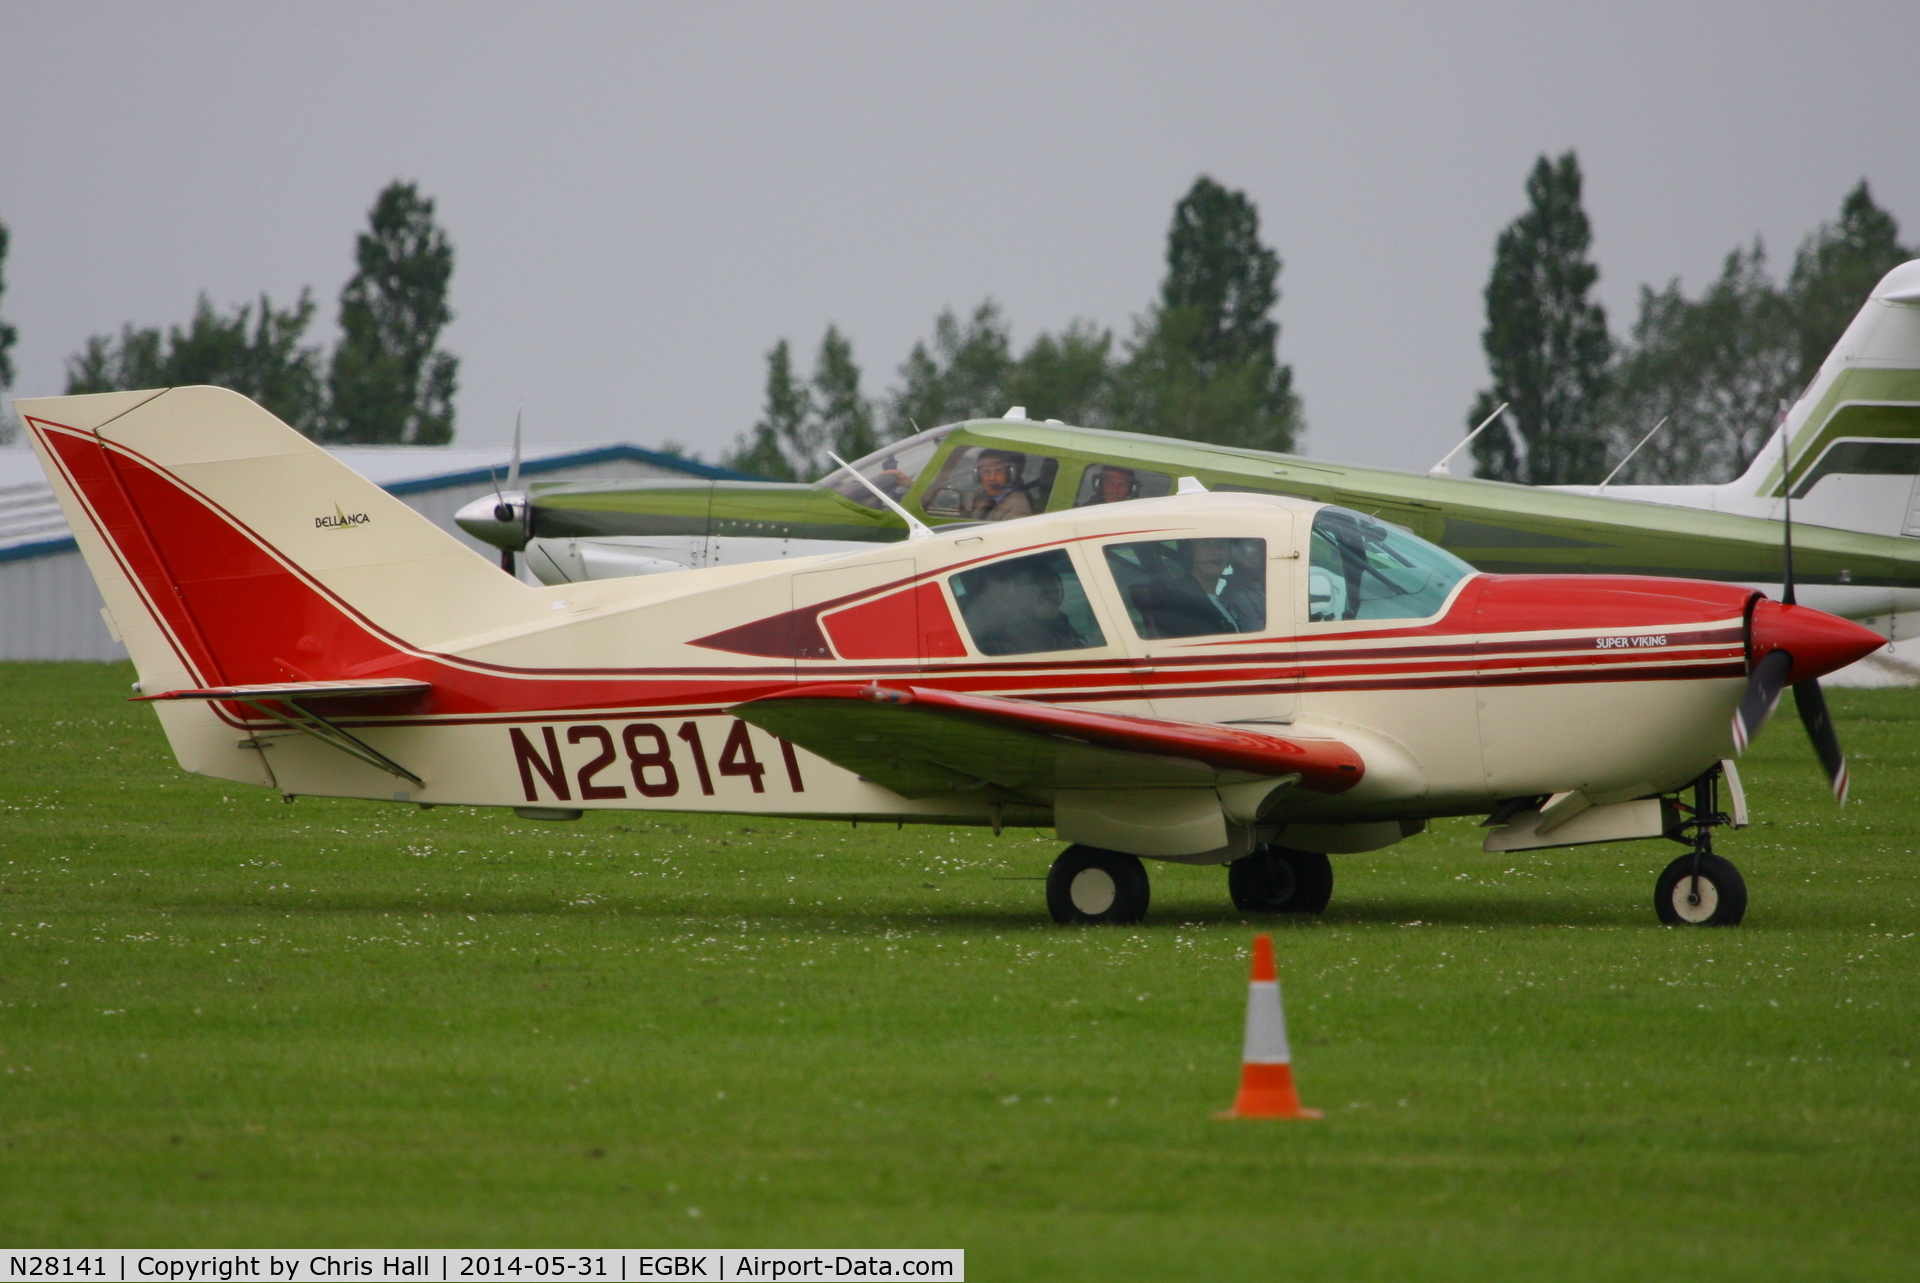 N28141, 1980 Bellanca 17-30A Viking C/N 80-30982, at AeroExpo 2014